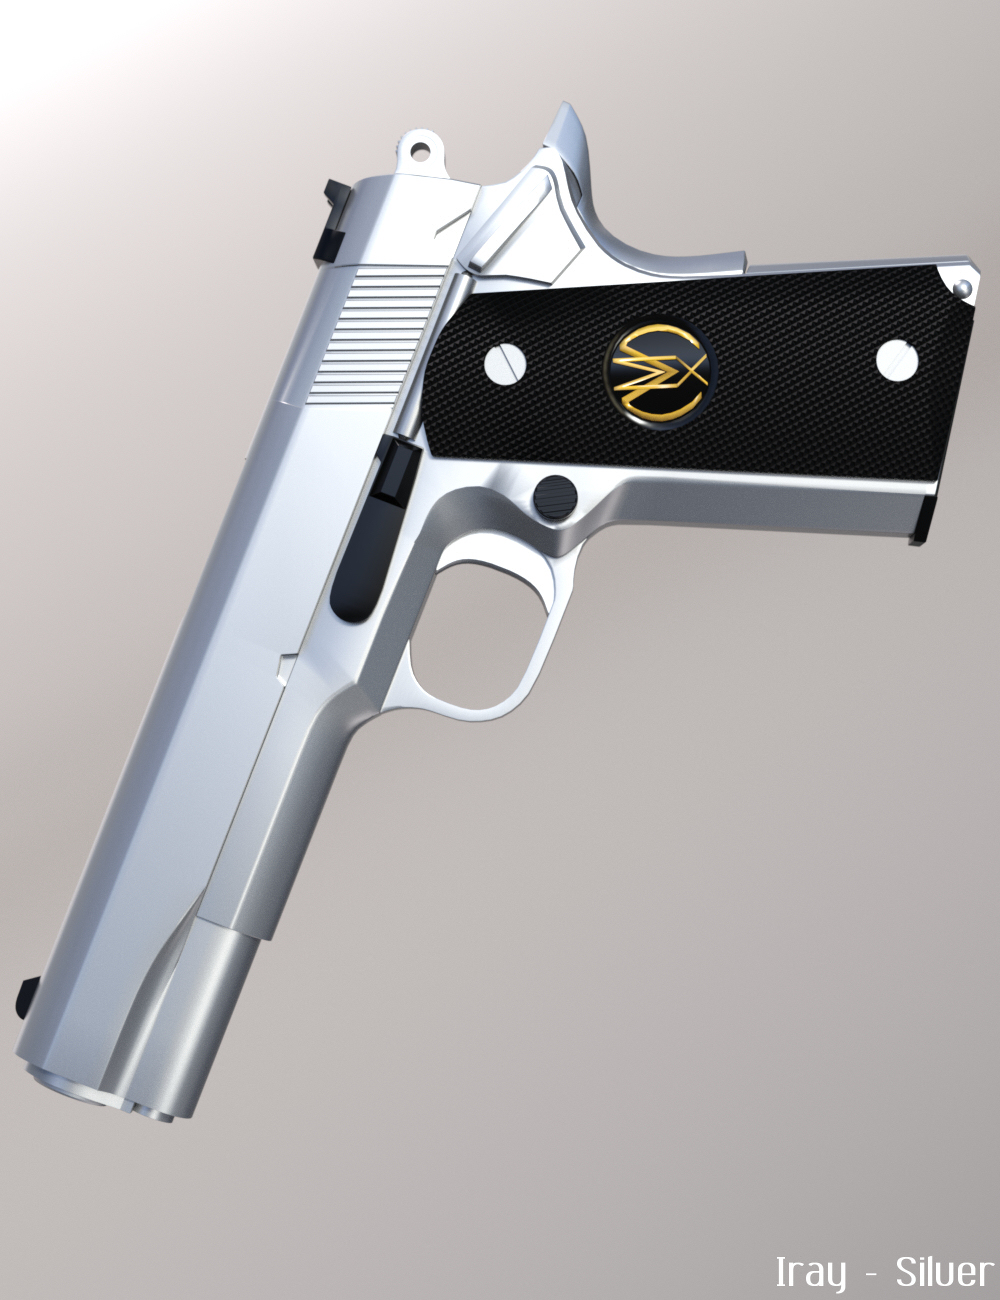 MMX-45ACP Pistol with Accessories by: Mattymanx, 3D Models by Daz 3D